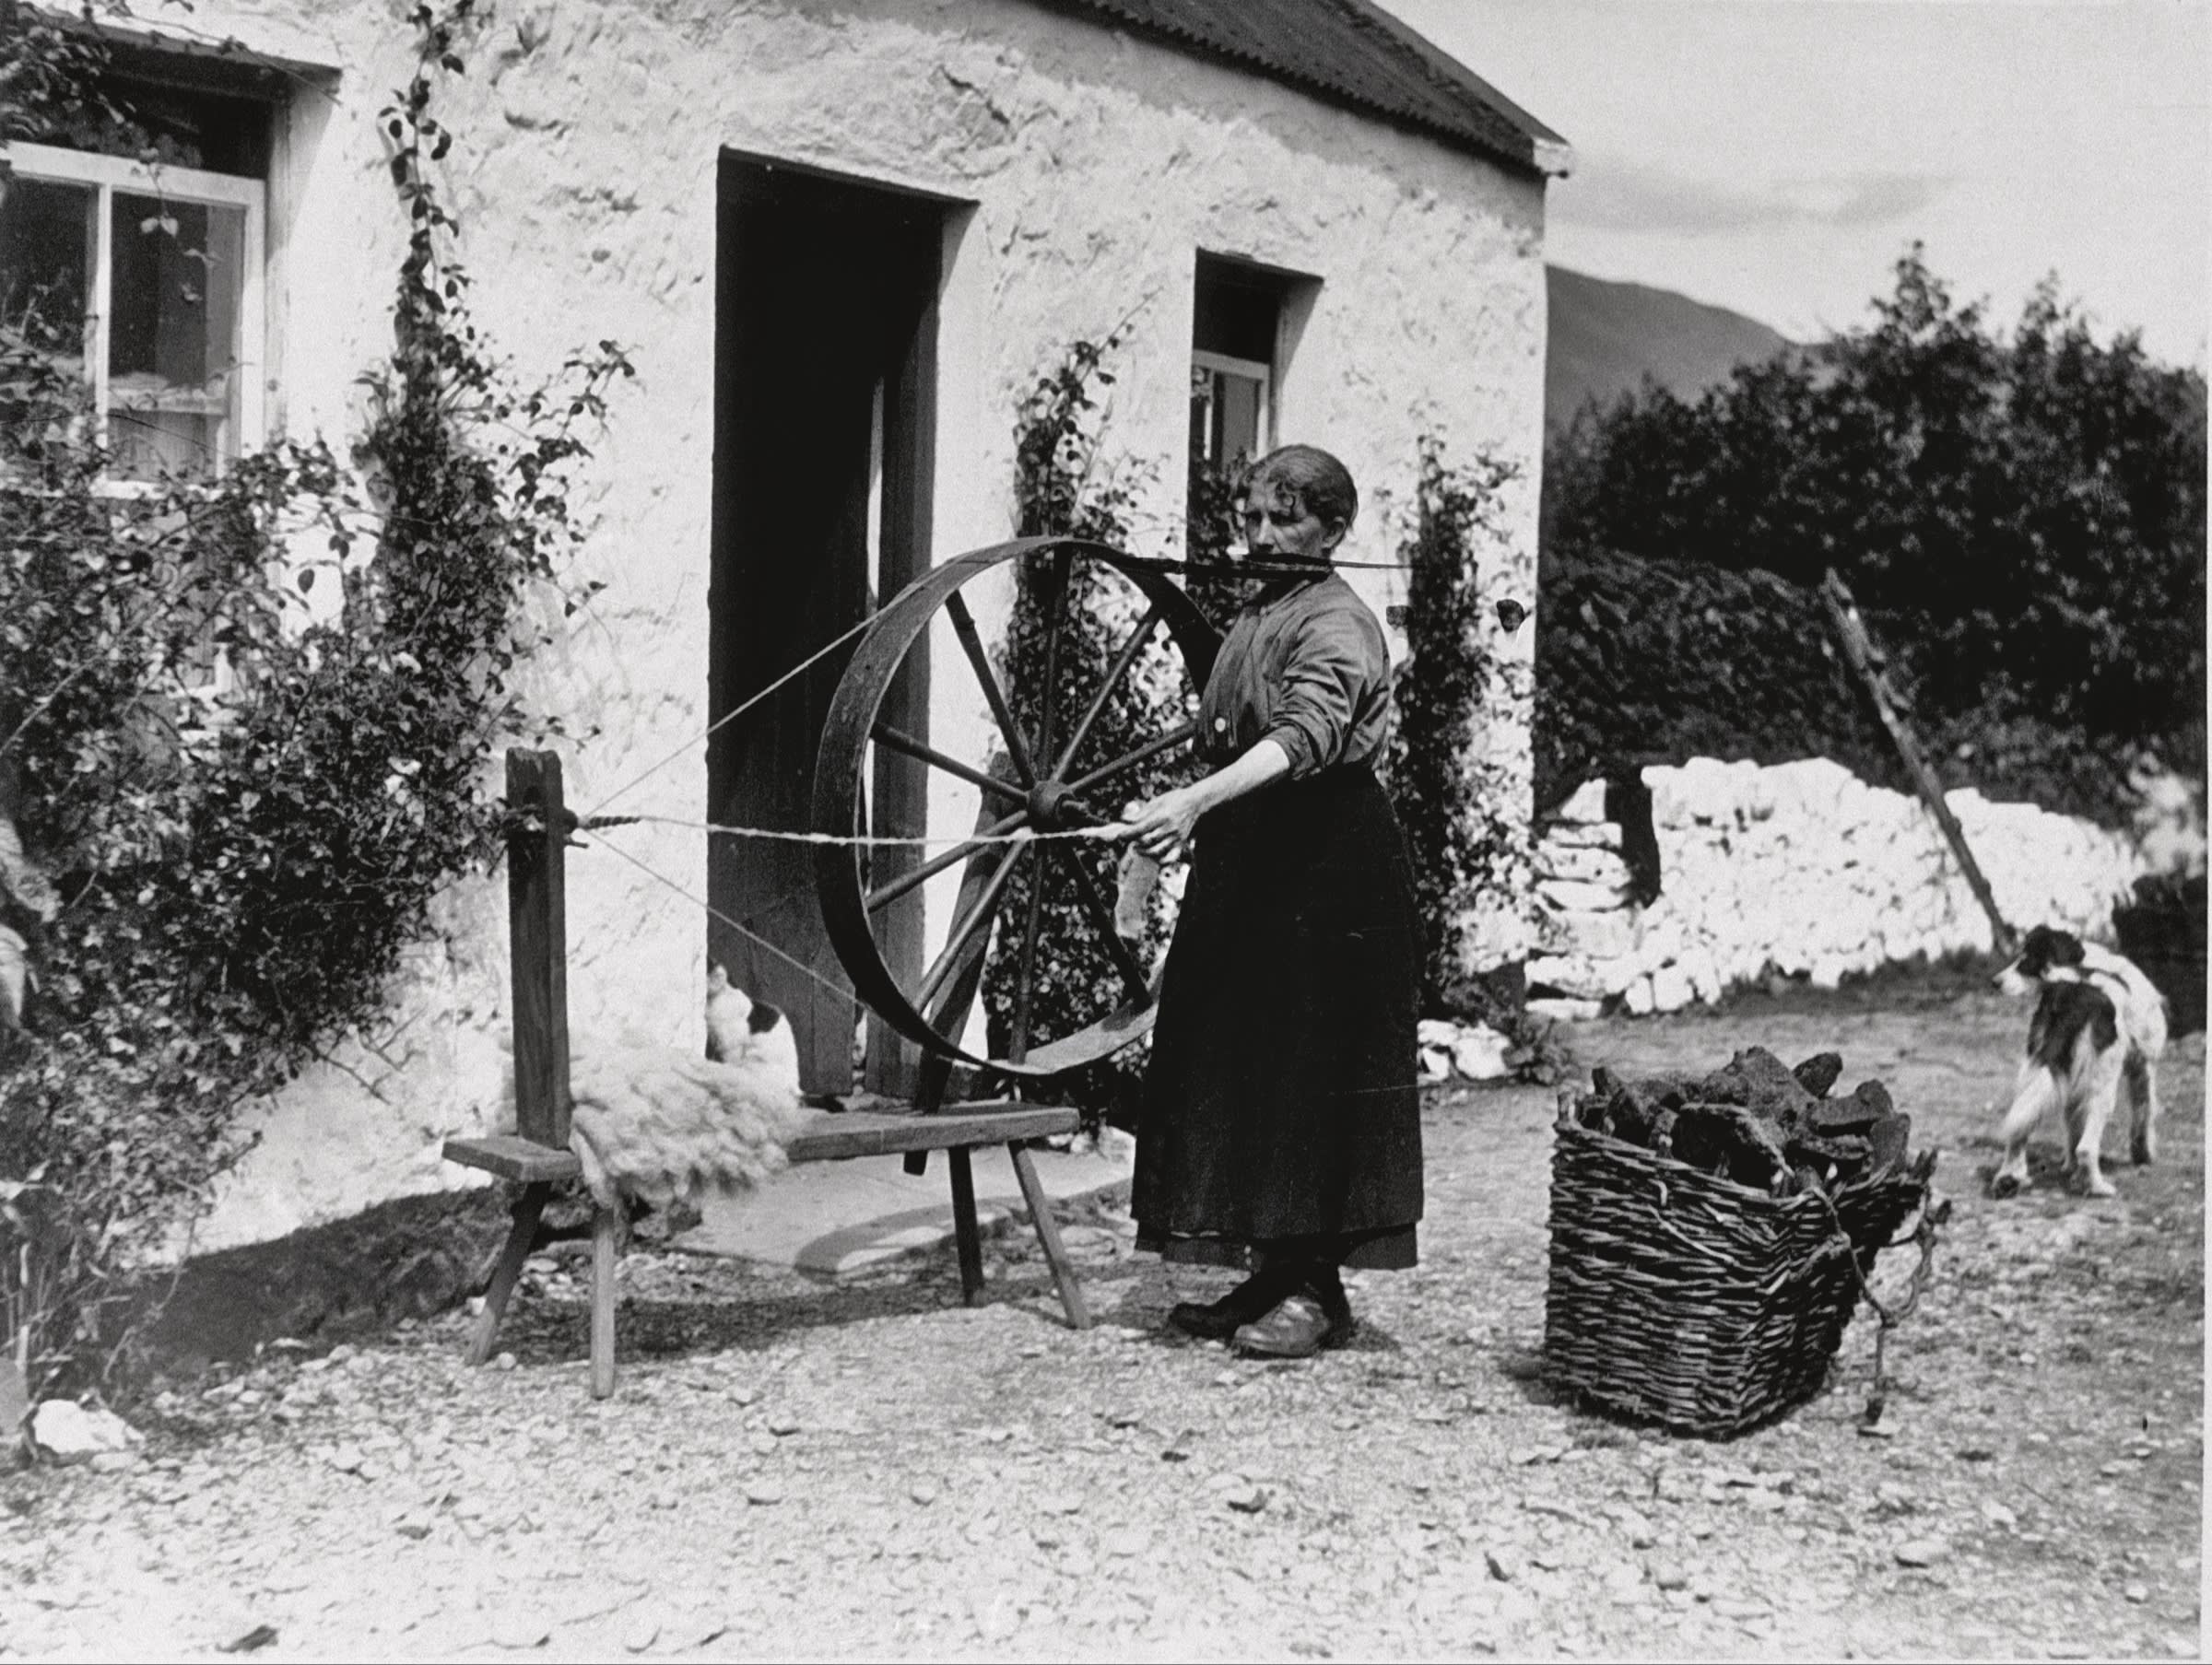 Spinning wool in Connemara, c1925